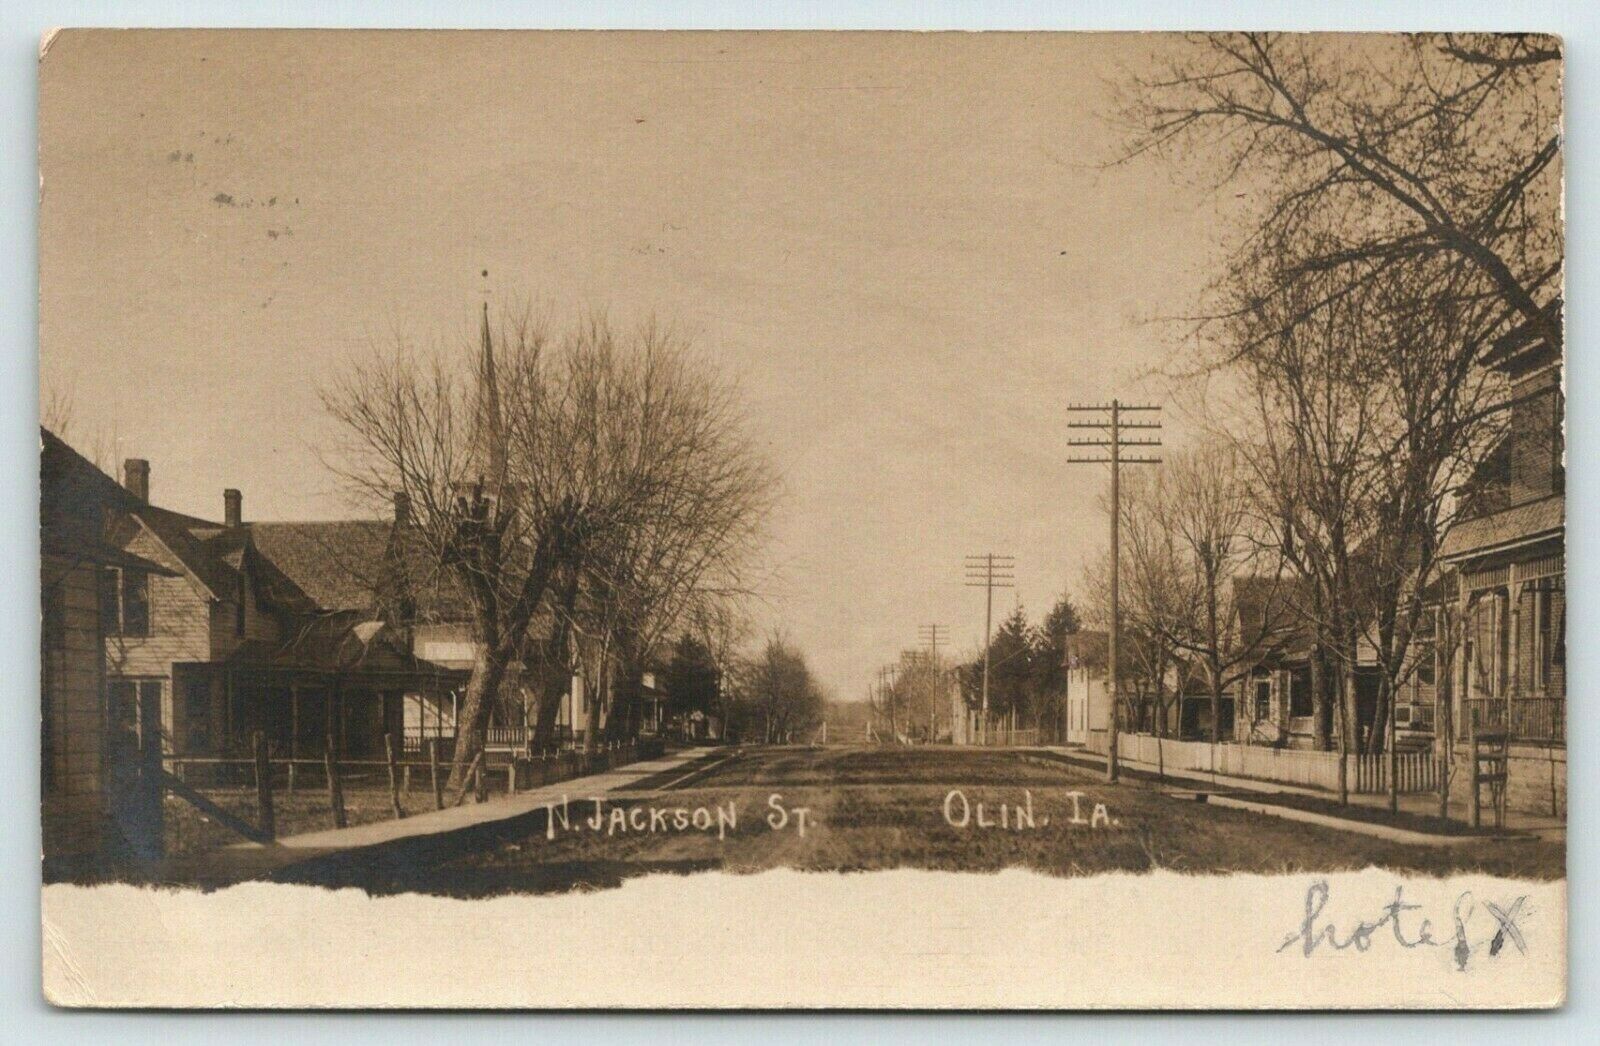 Jackson Street, Olin, Iowa